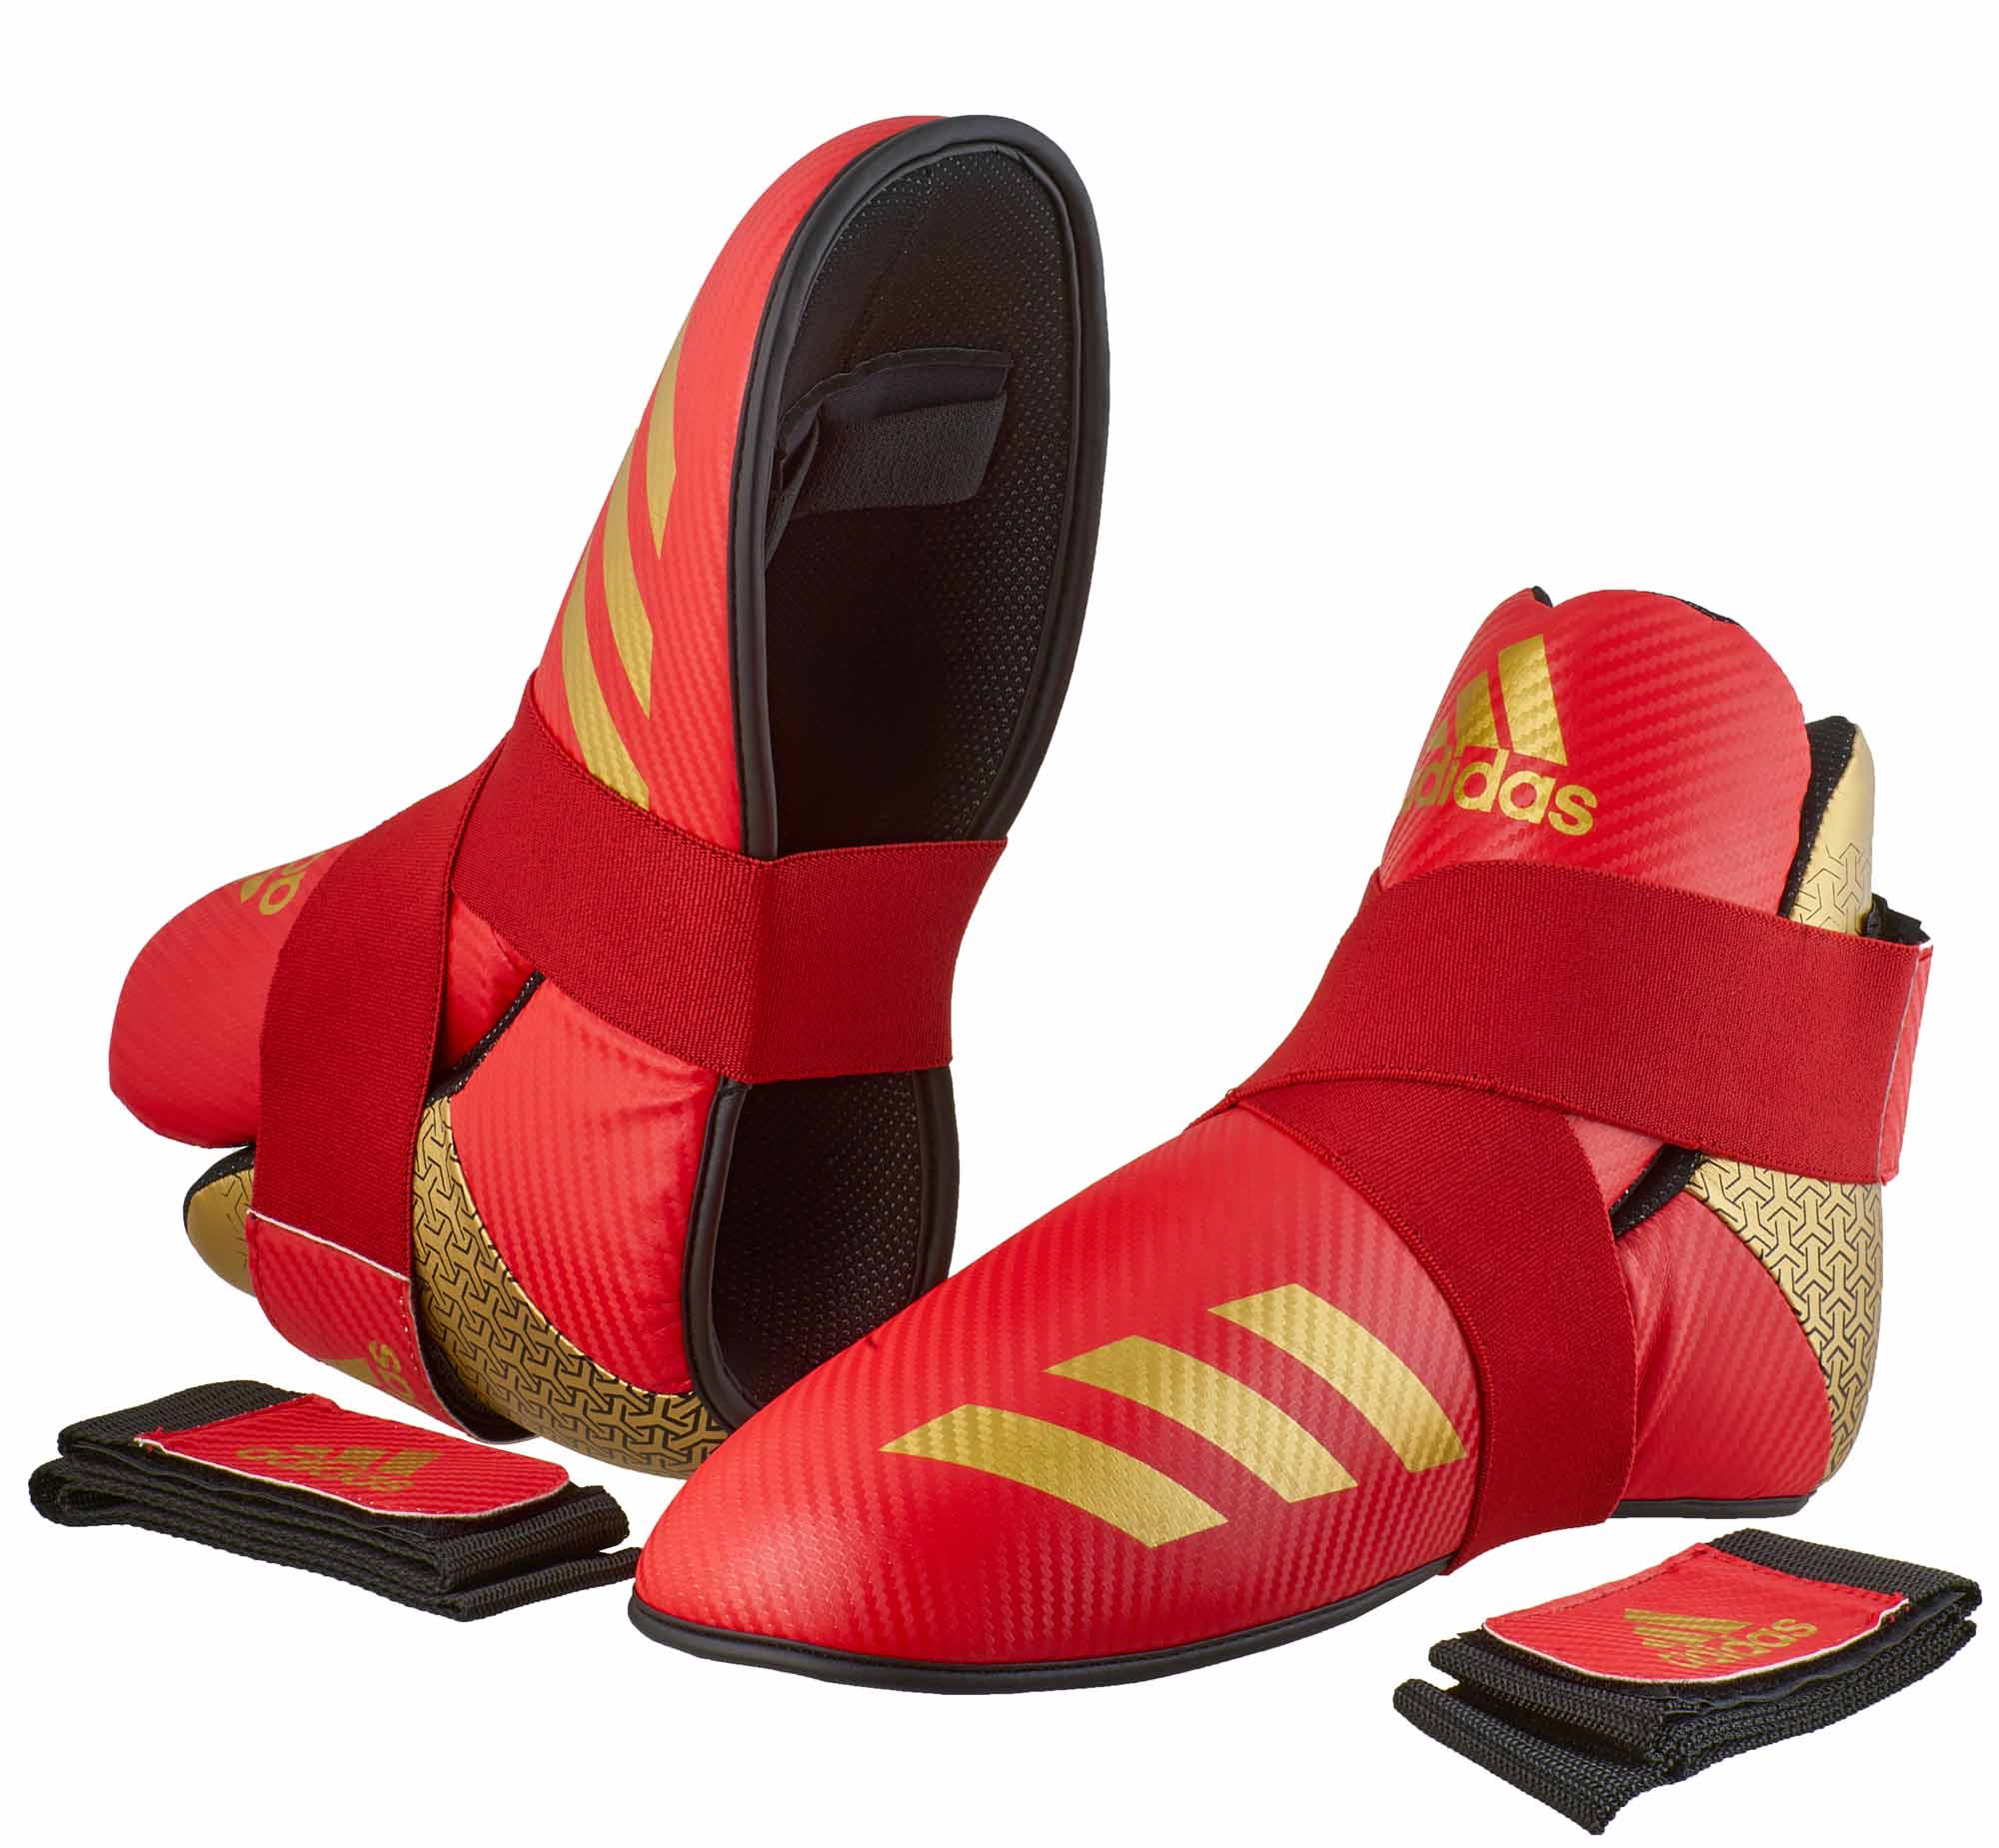 adidas Super Safety Kicks, adiKBB300HD red/gold